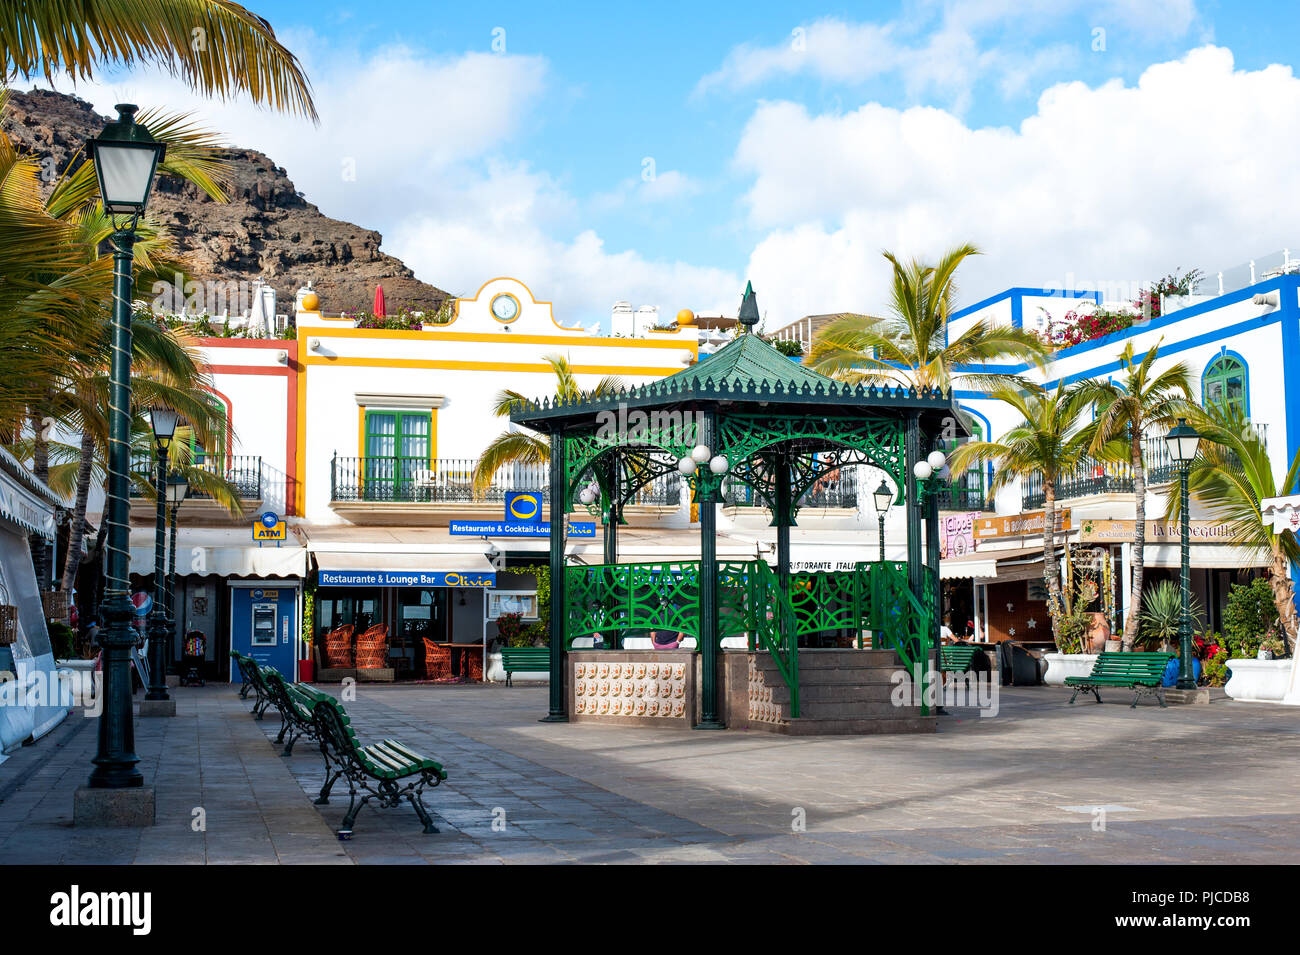 Puerto de Mogan, Gran Canaria, Spain - 06 January 2018, Quayside plaza with nice pavilion in the center square in  Puerto de Mogan, Stock Photo